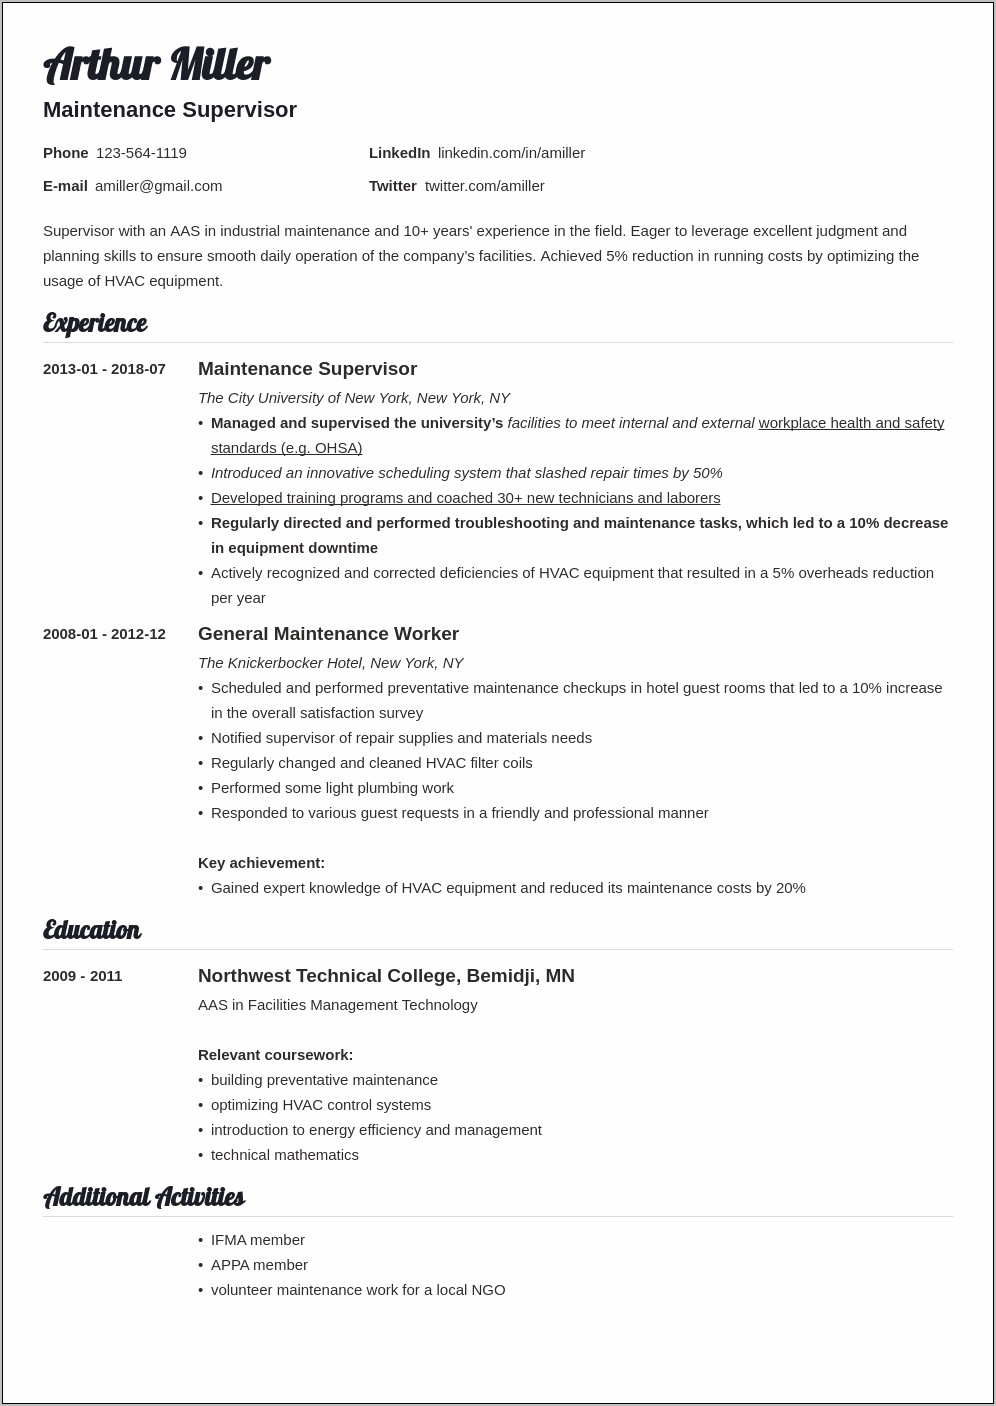 Maintenance Supervisor Resume Summary Of Qualifications